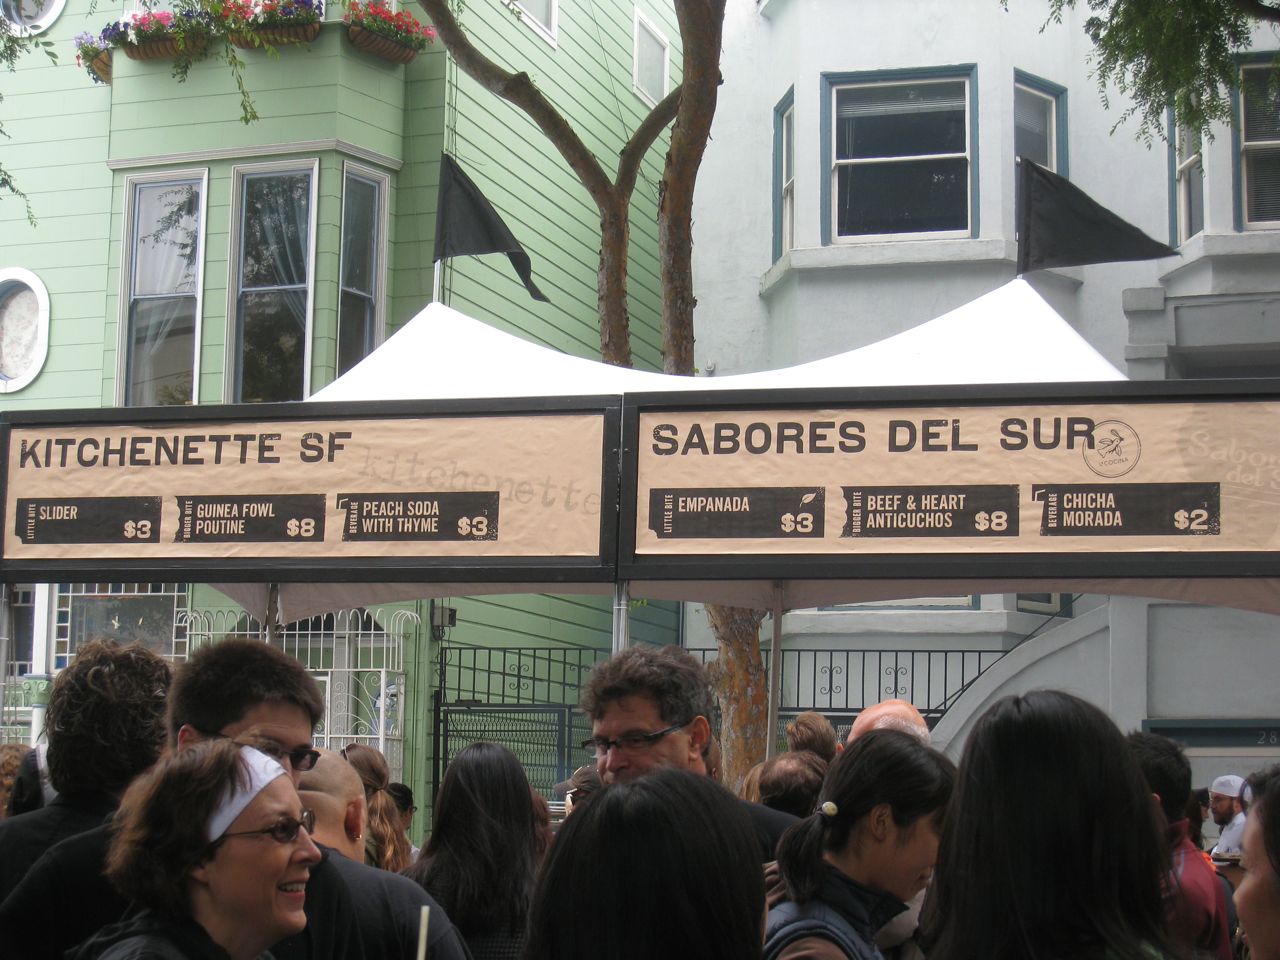 The SF Street Food Festival